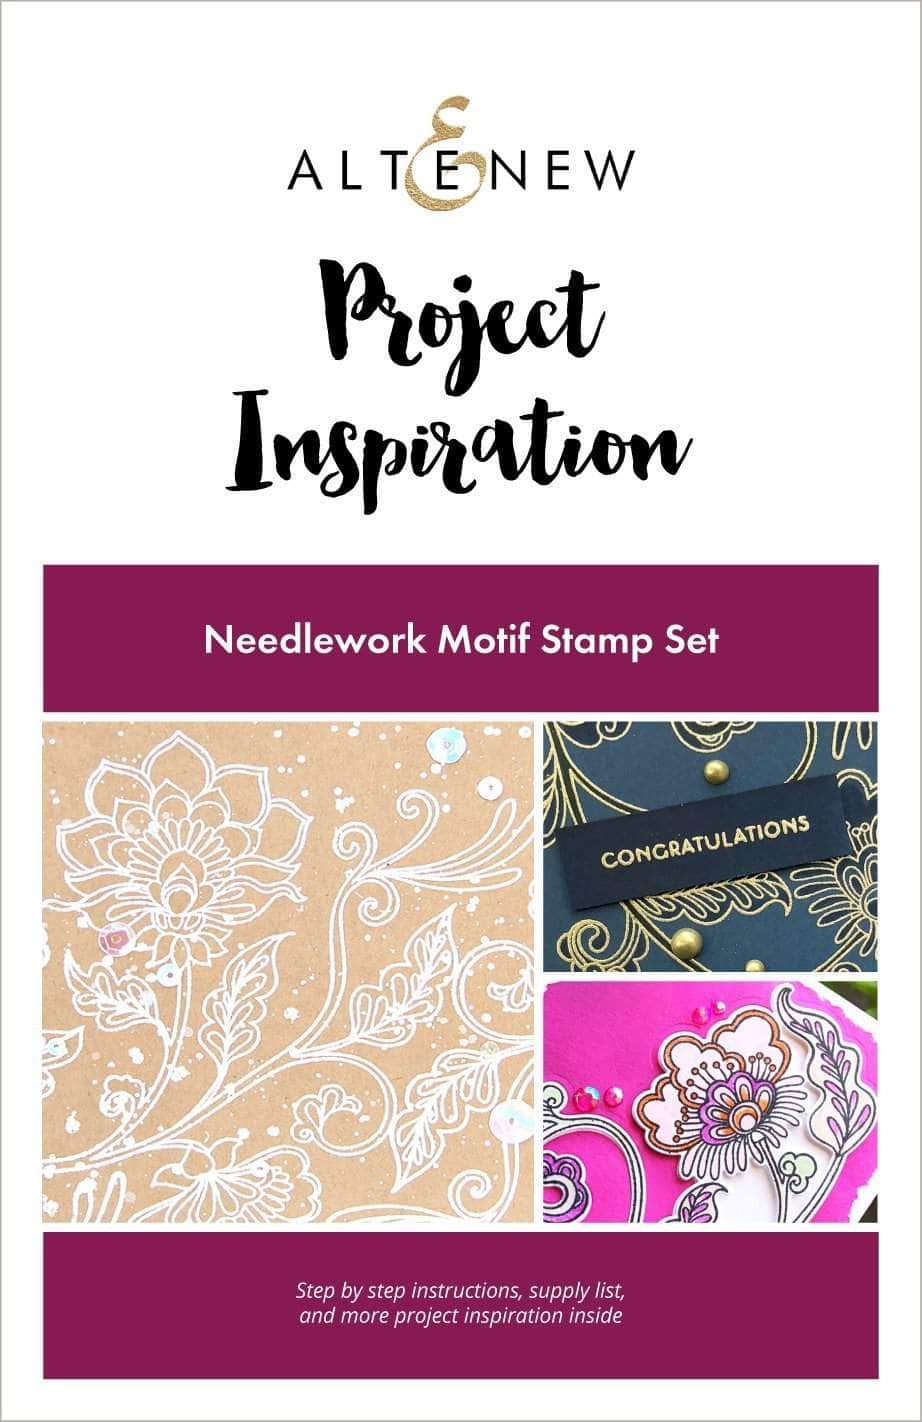 55Printing.com Printed Media Needlework Motif Project Inspiration Guide